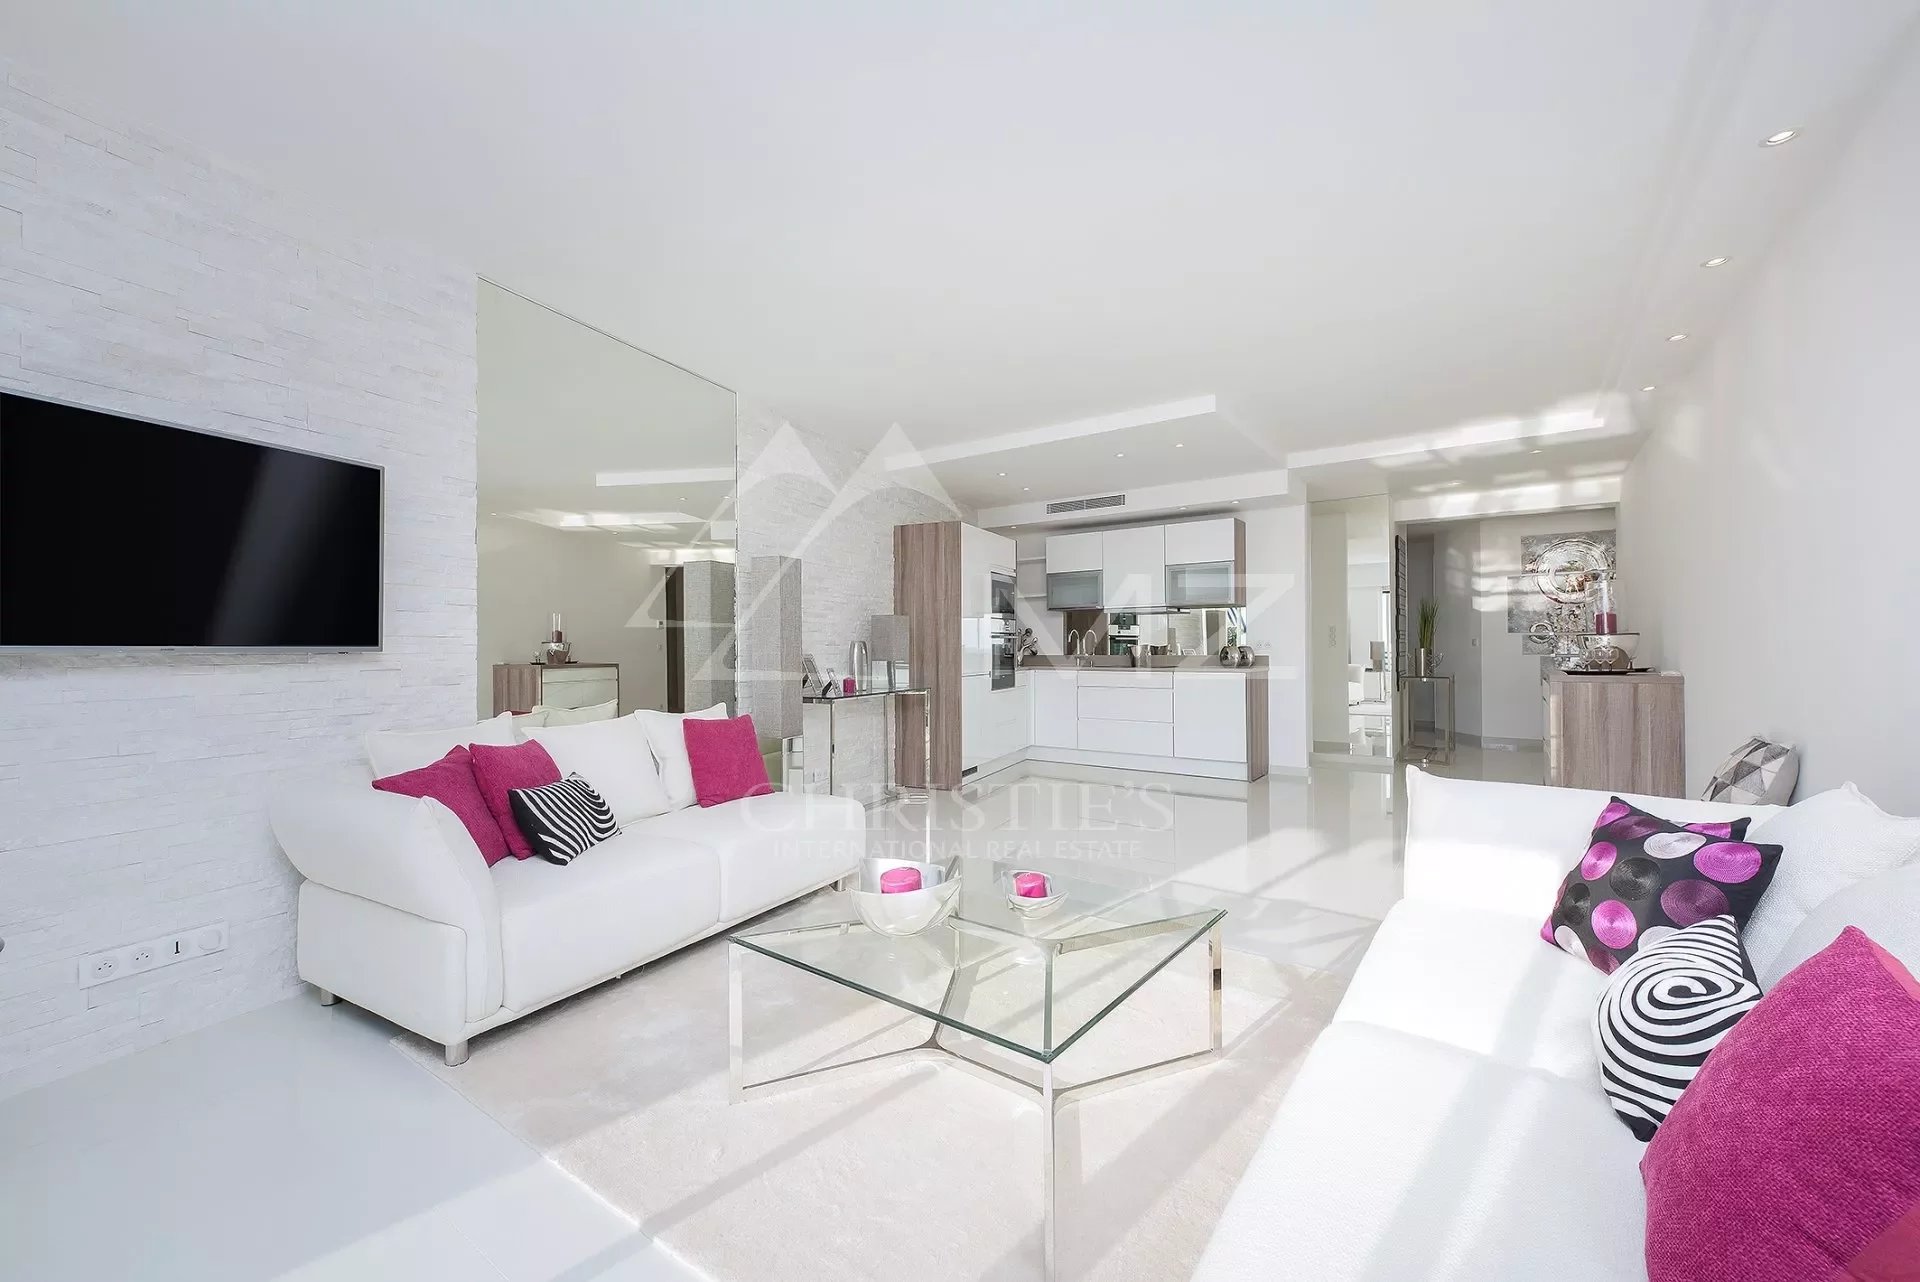 Cannes Croisette - Beautiful apartment